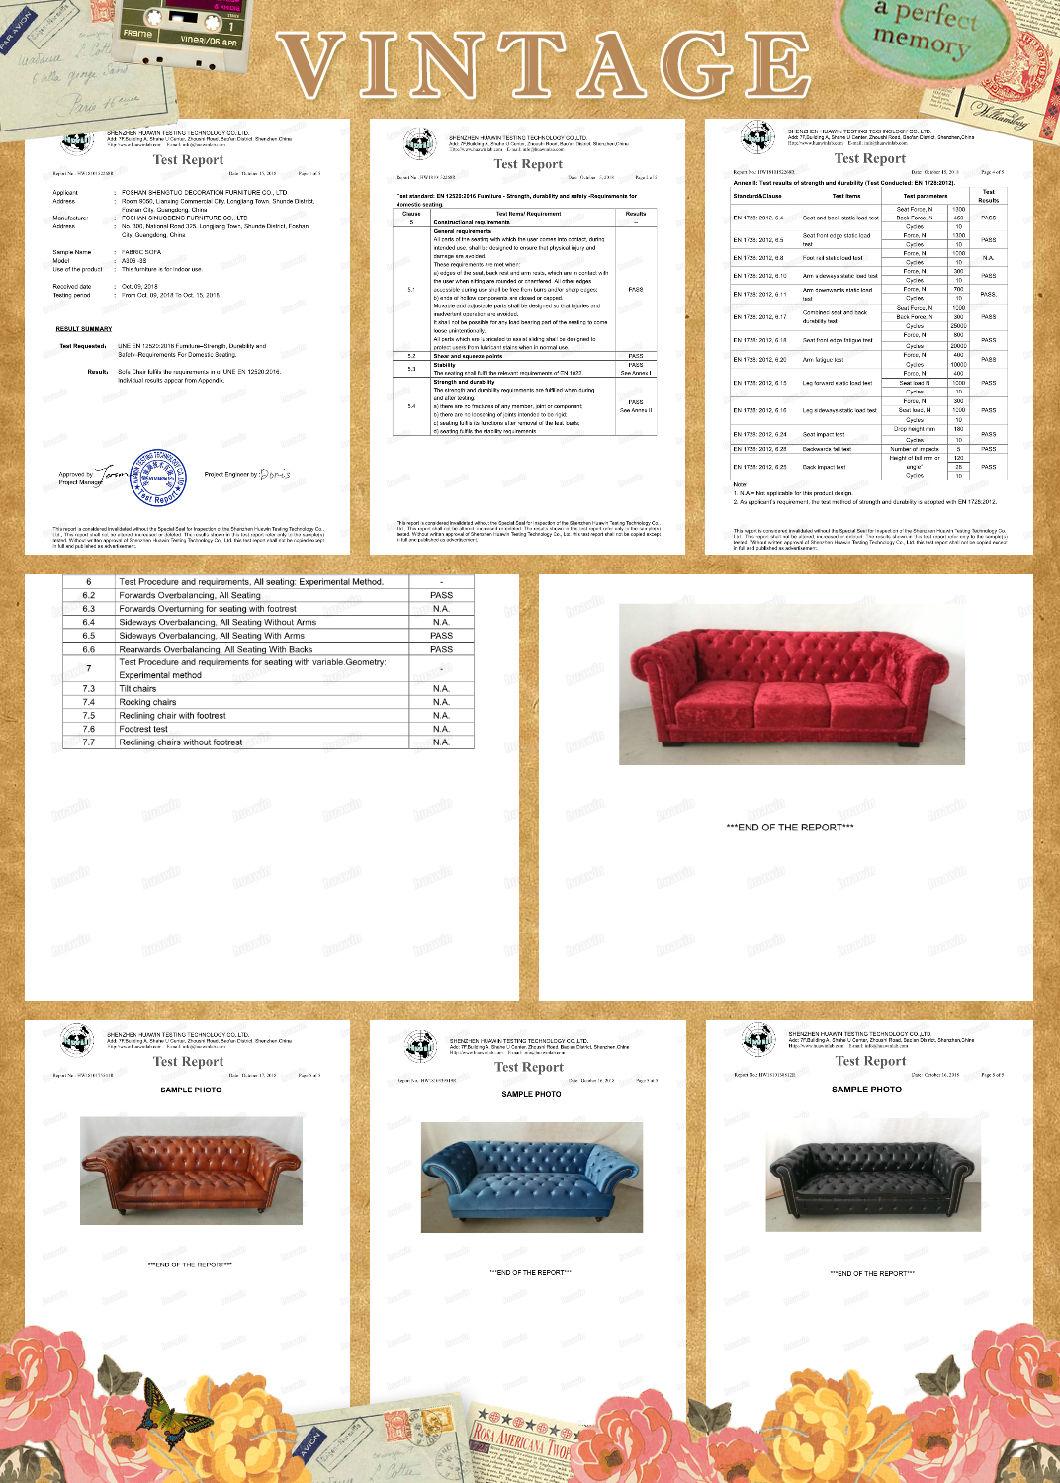 Sofa Sets for Living Room Modern Soft Fabric Sofa Sets Sectional Top Grain Leather Sofa Set